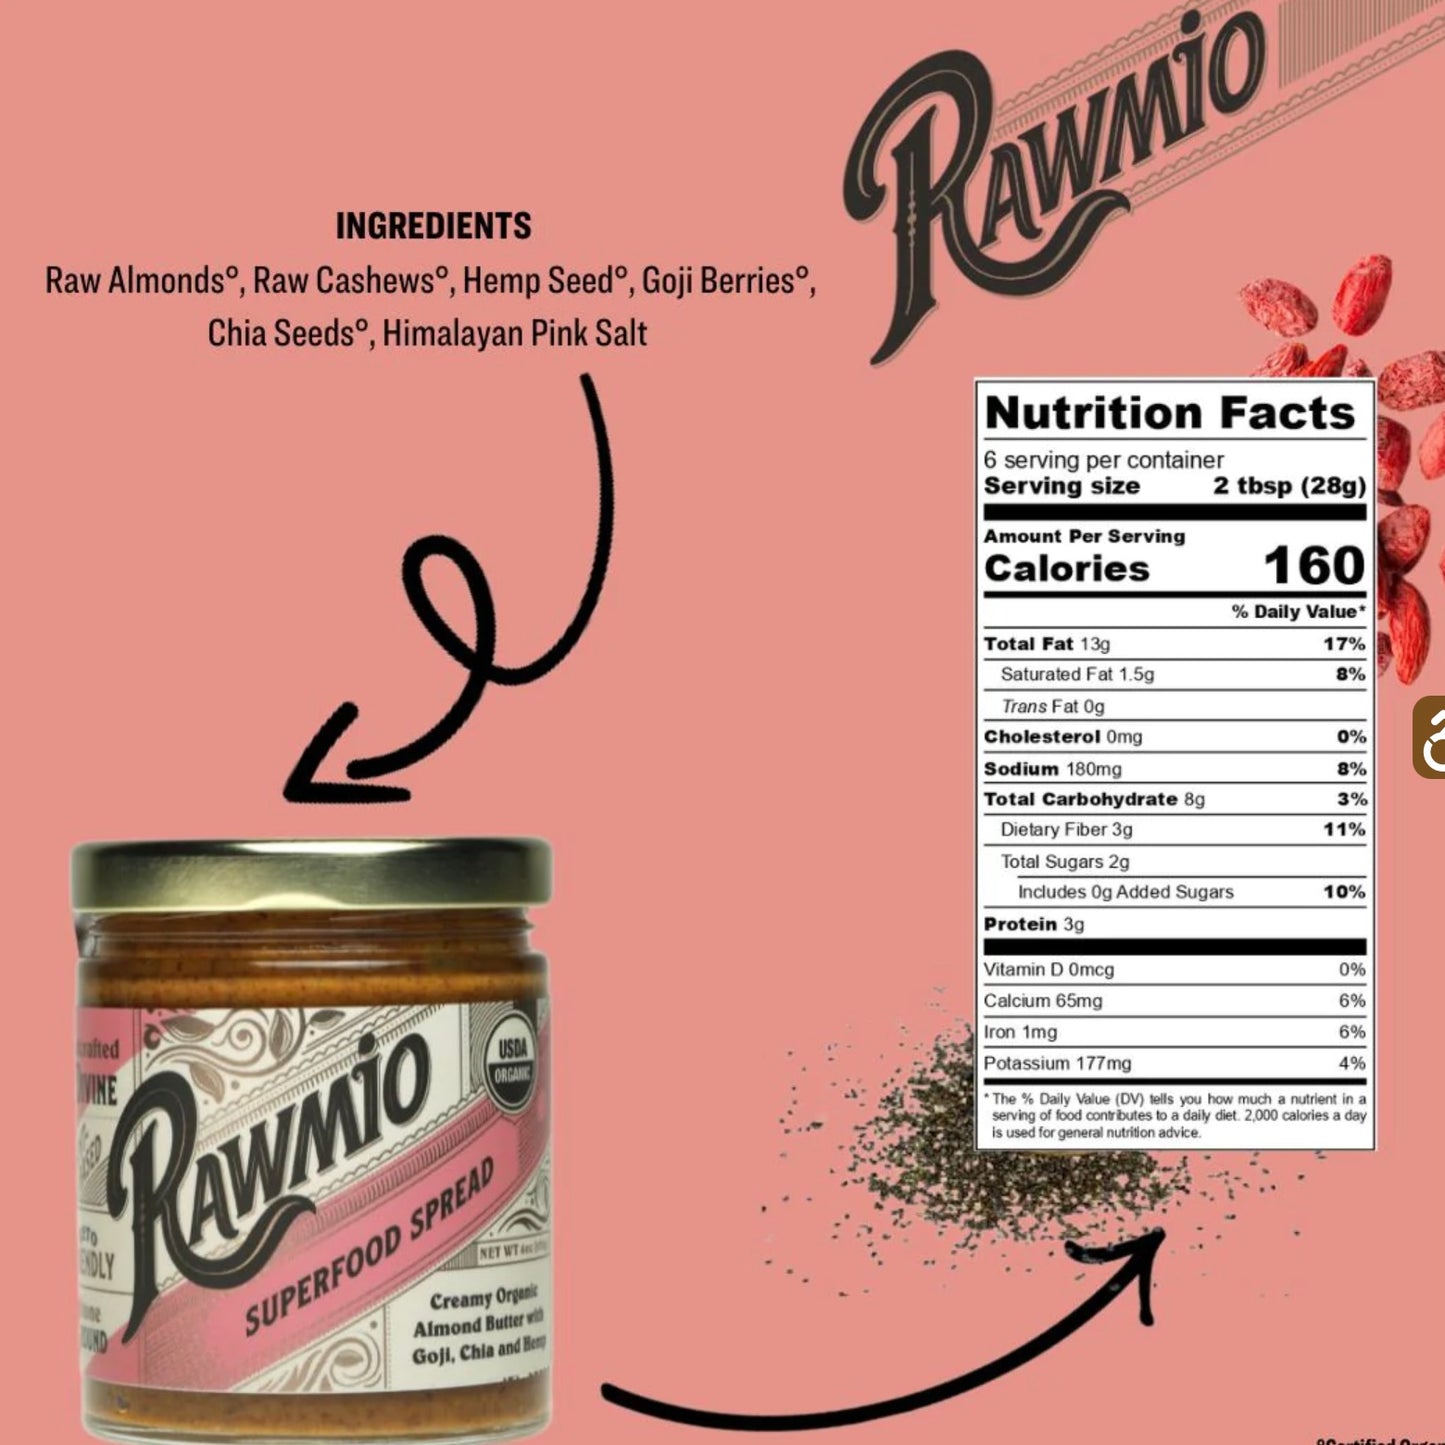 Rawmio Superfood Spread